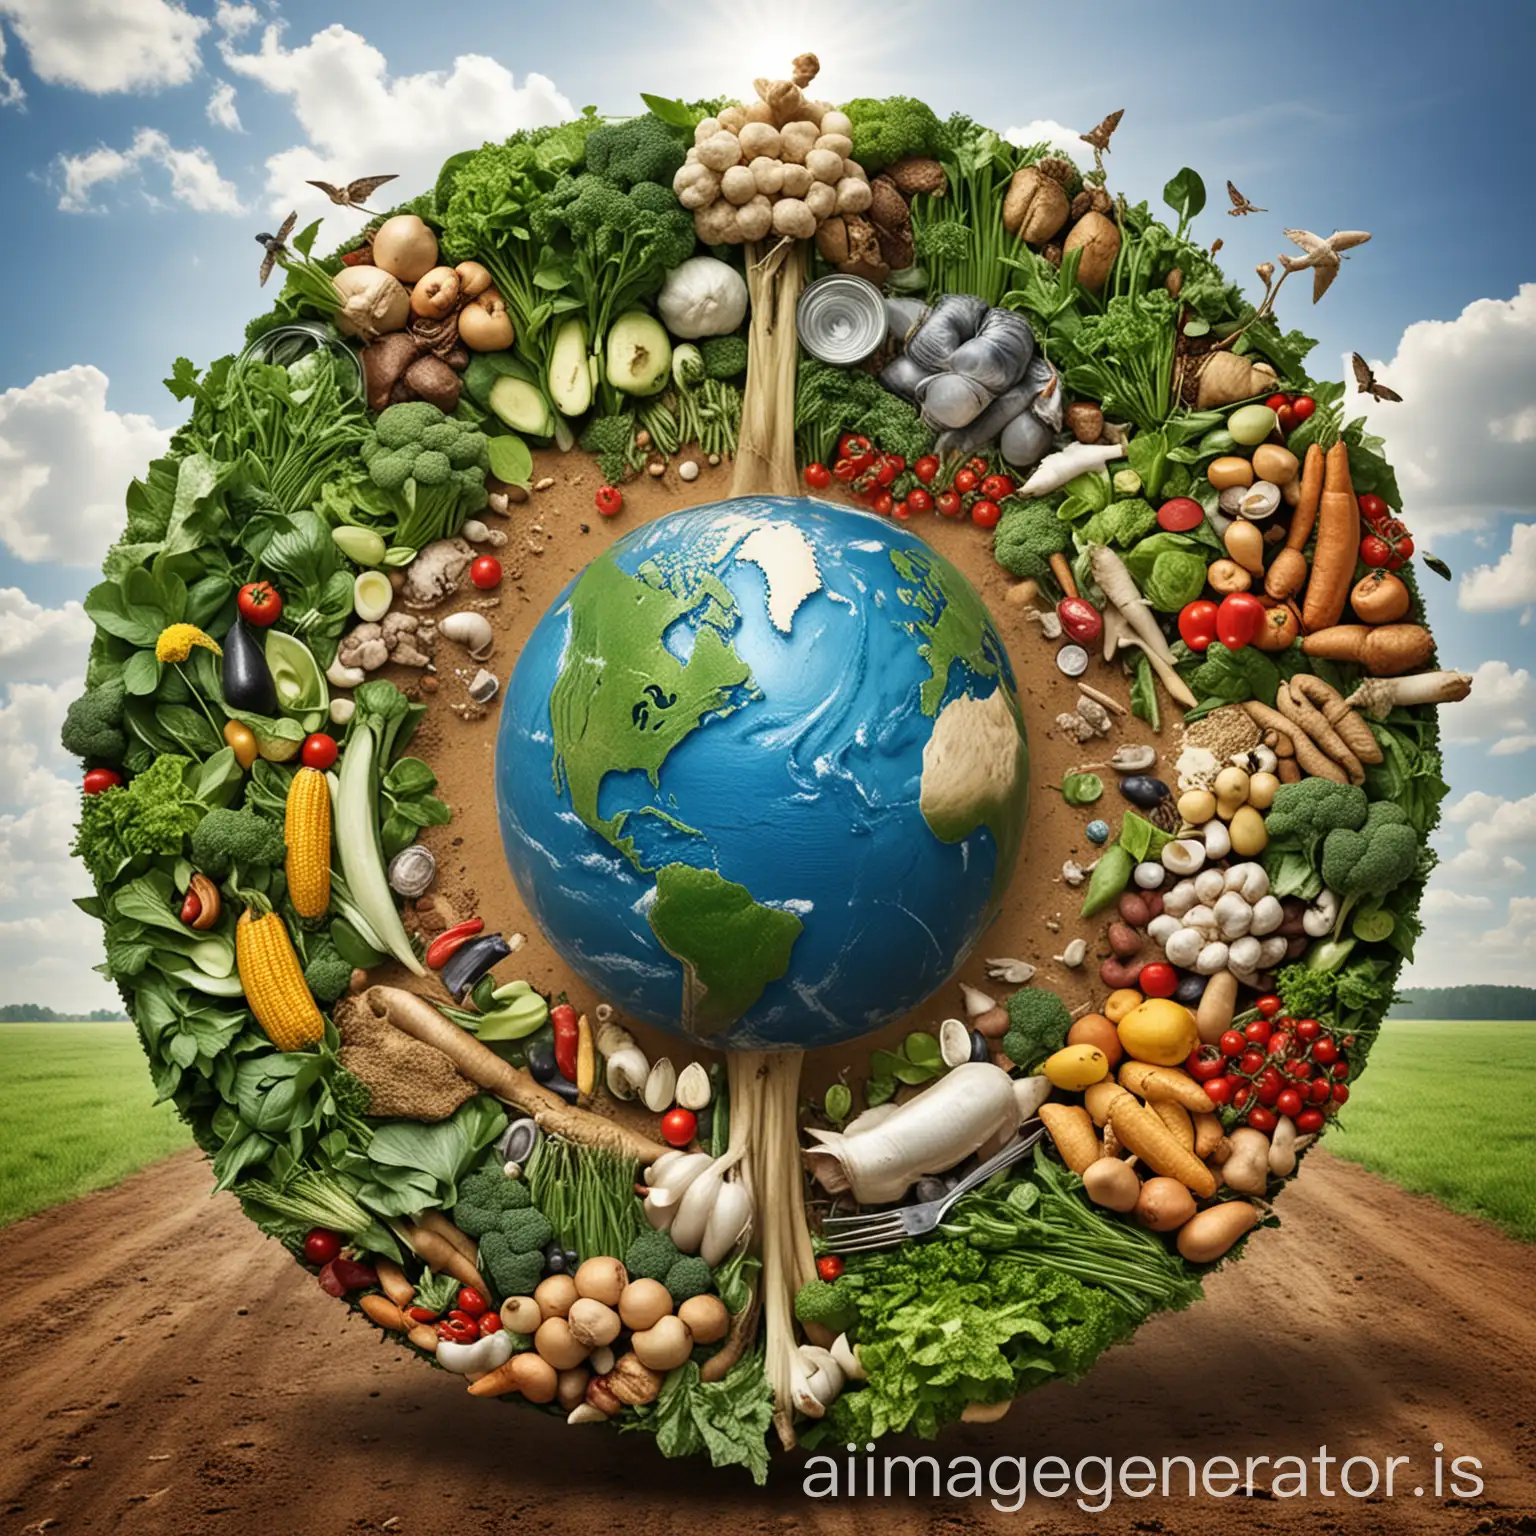 Food-Cycle-in-Environmental-Awareness-Imagery